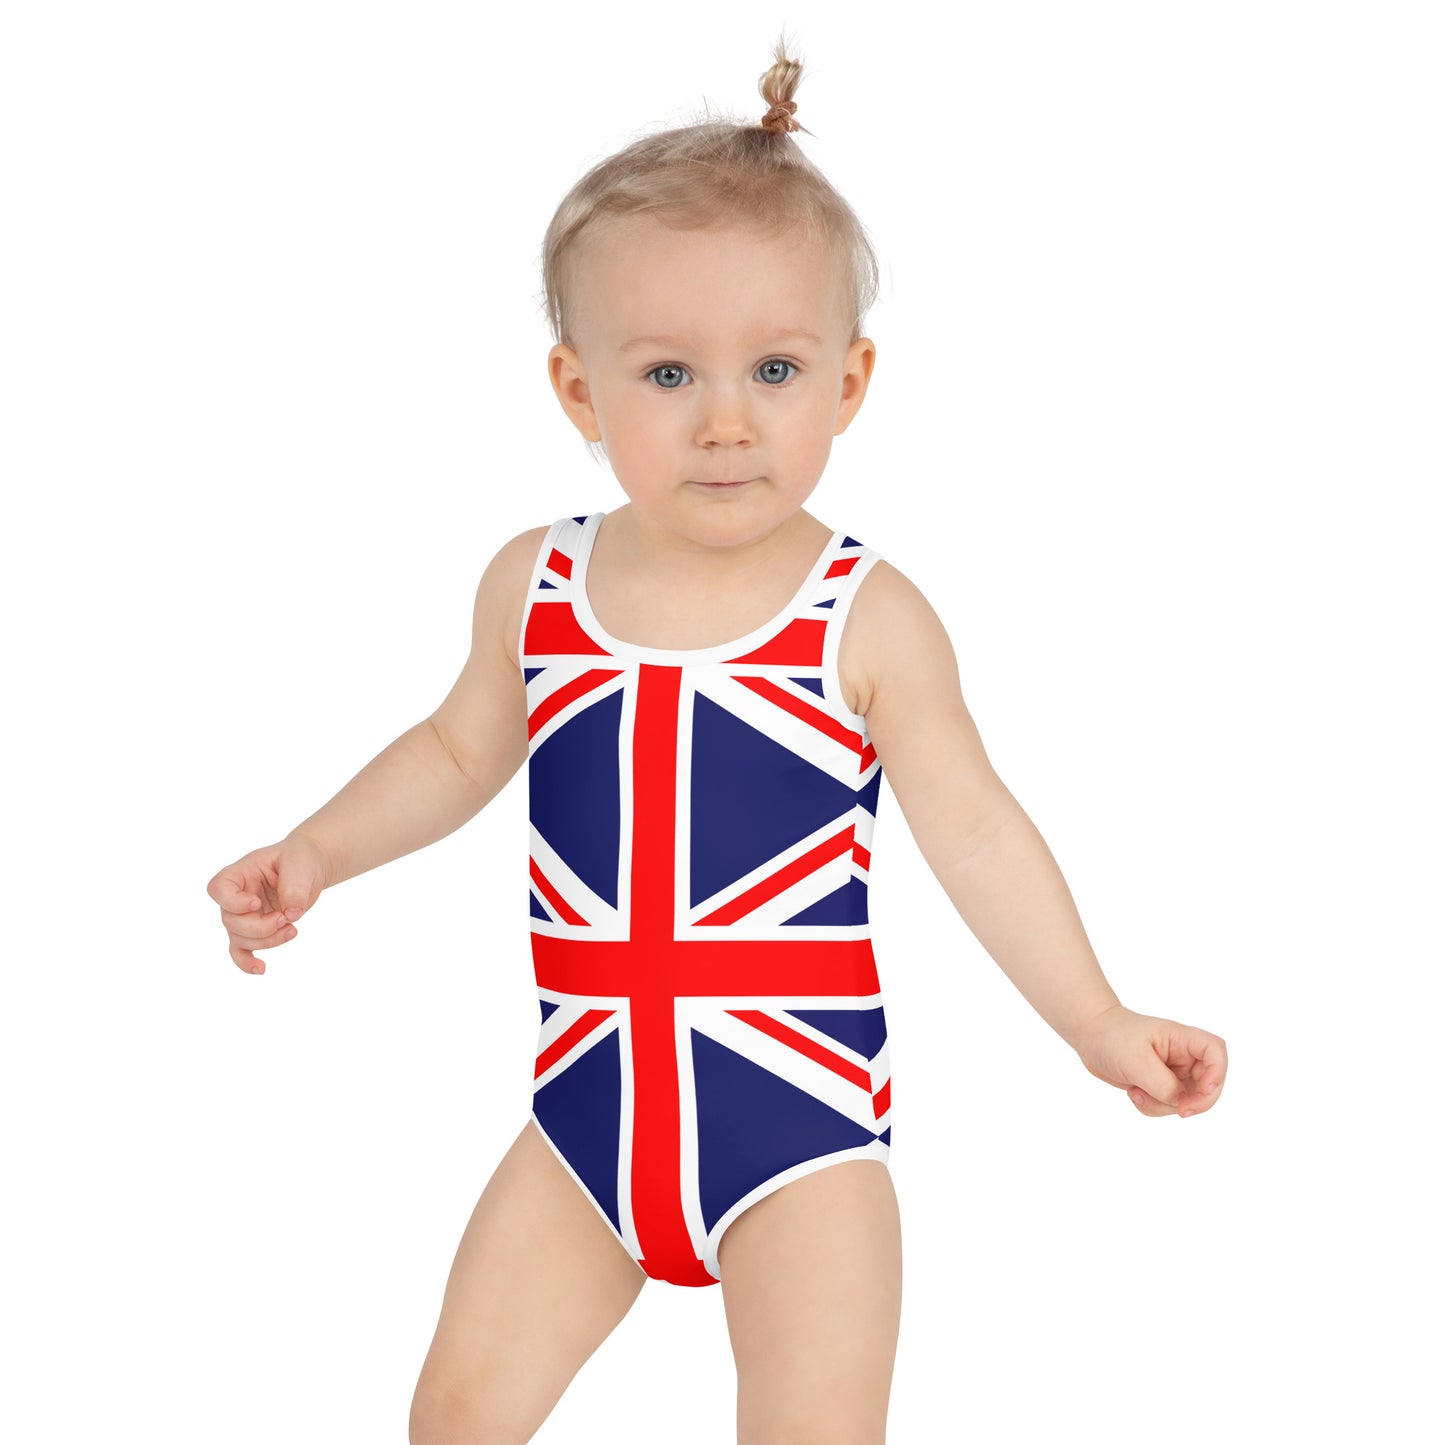 Union Jack Children's Clothing / Swimsuits